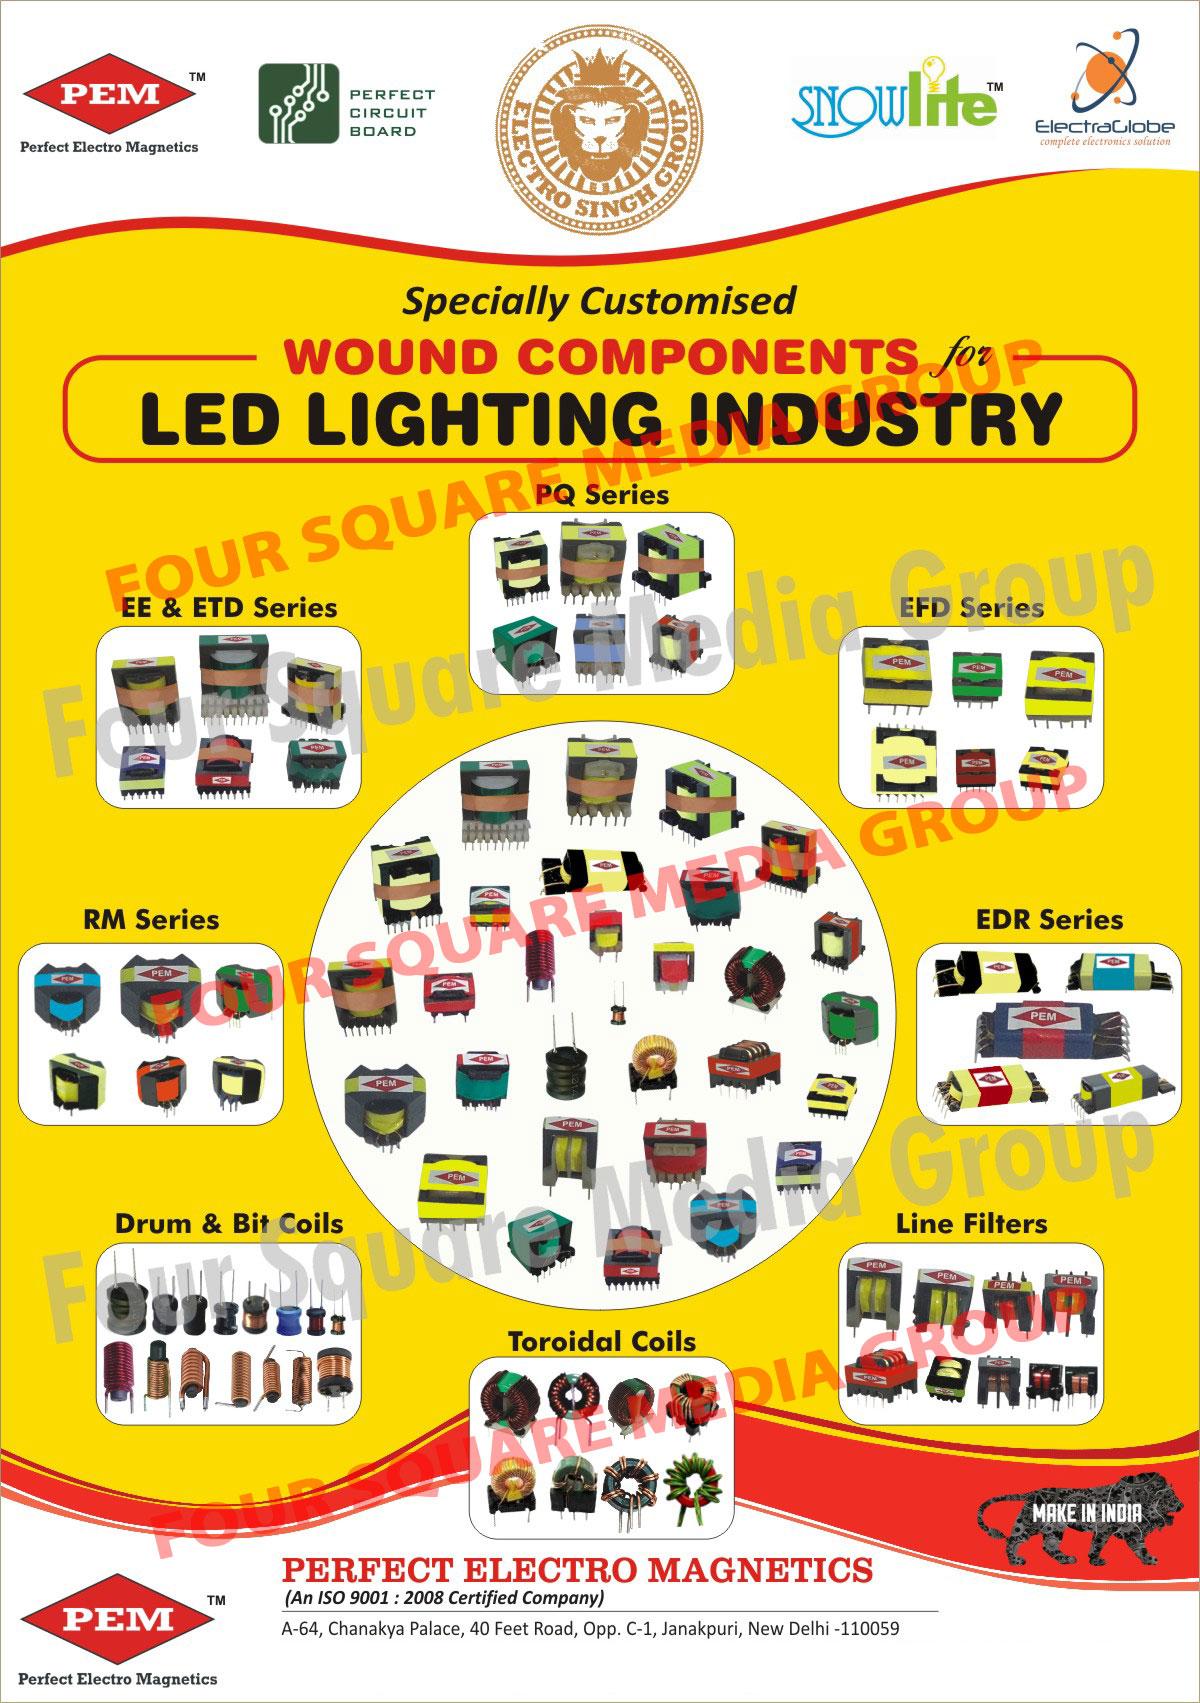 Led Light Industry Wound Components, Drum Coils, Bit Coils, Toroidal Coils Line Filters